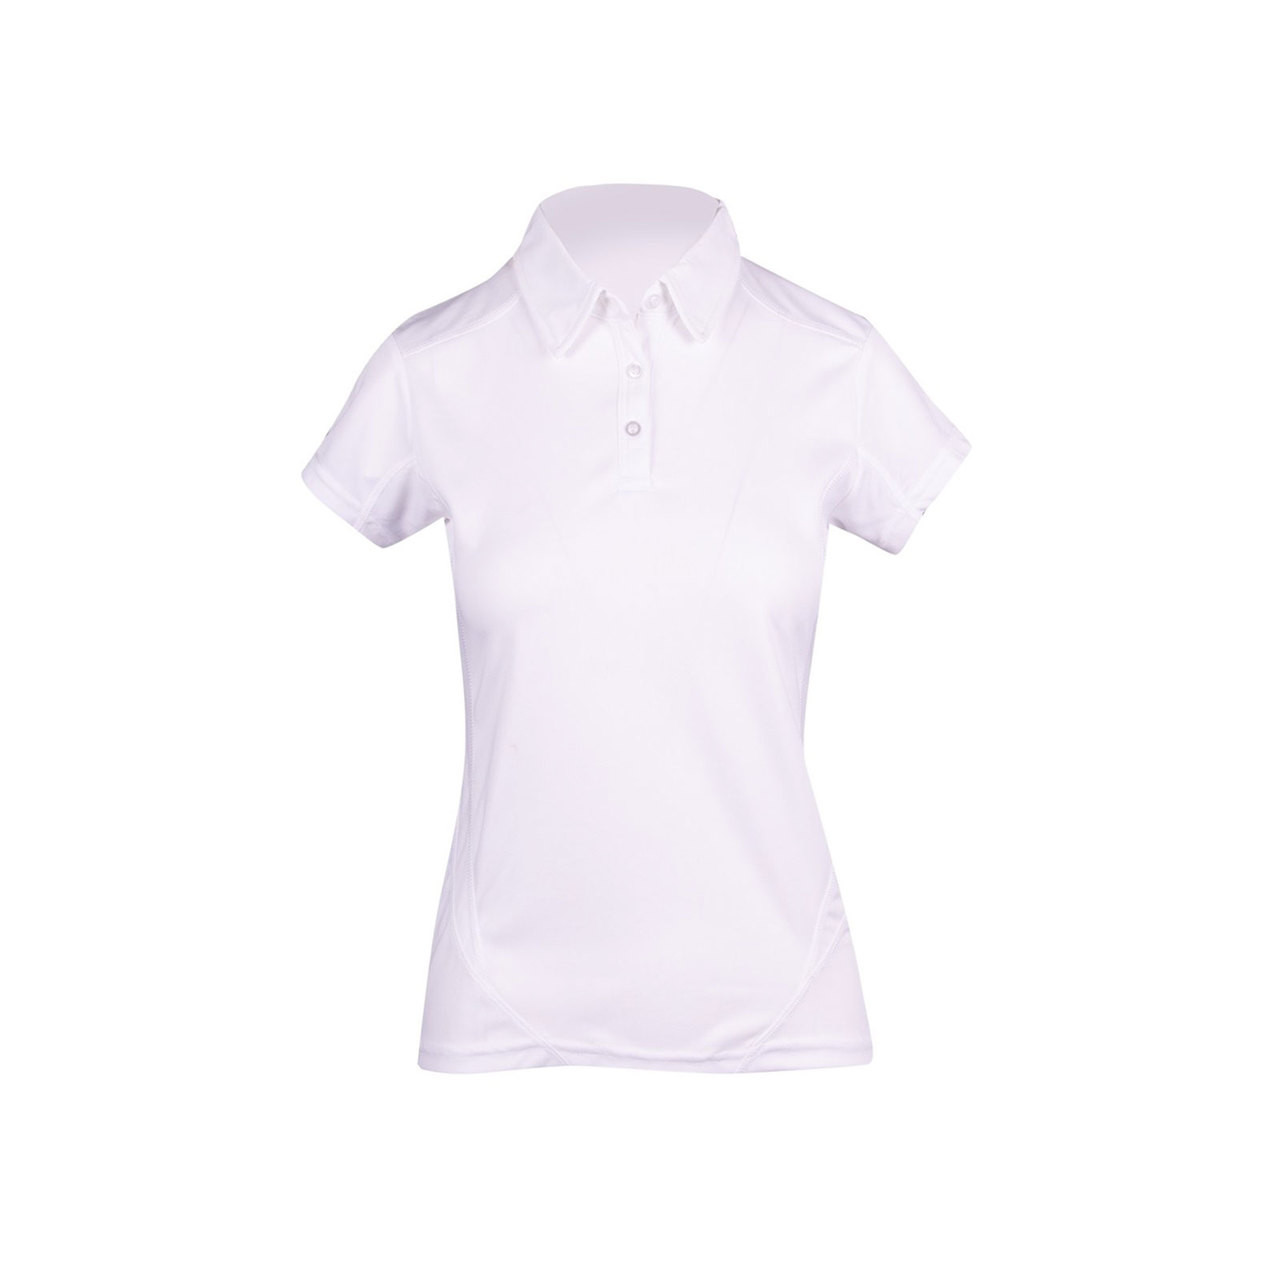 Ladies Cool Dry Contrast Polo Shirts | Buy Plain Sports Wear & Uniform ...